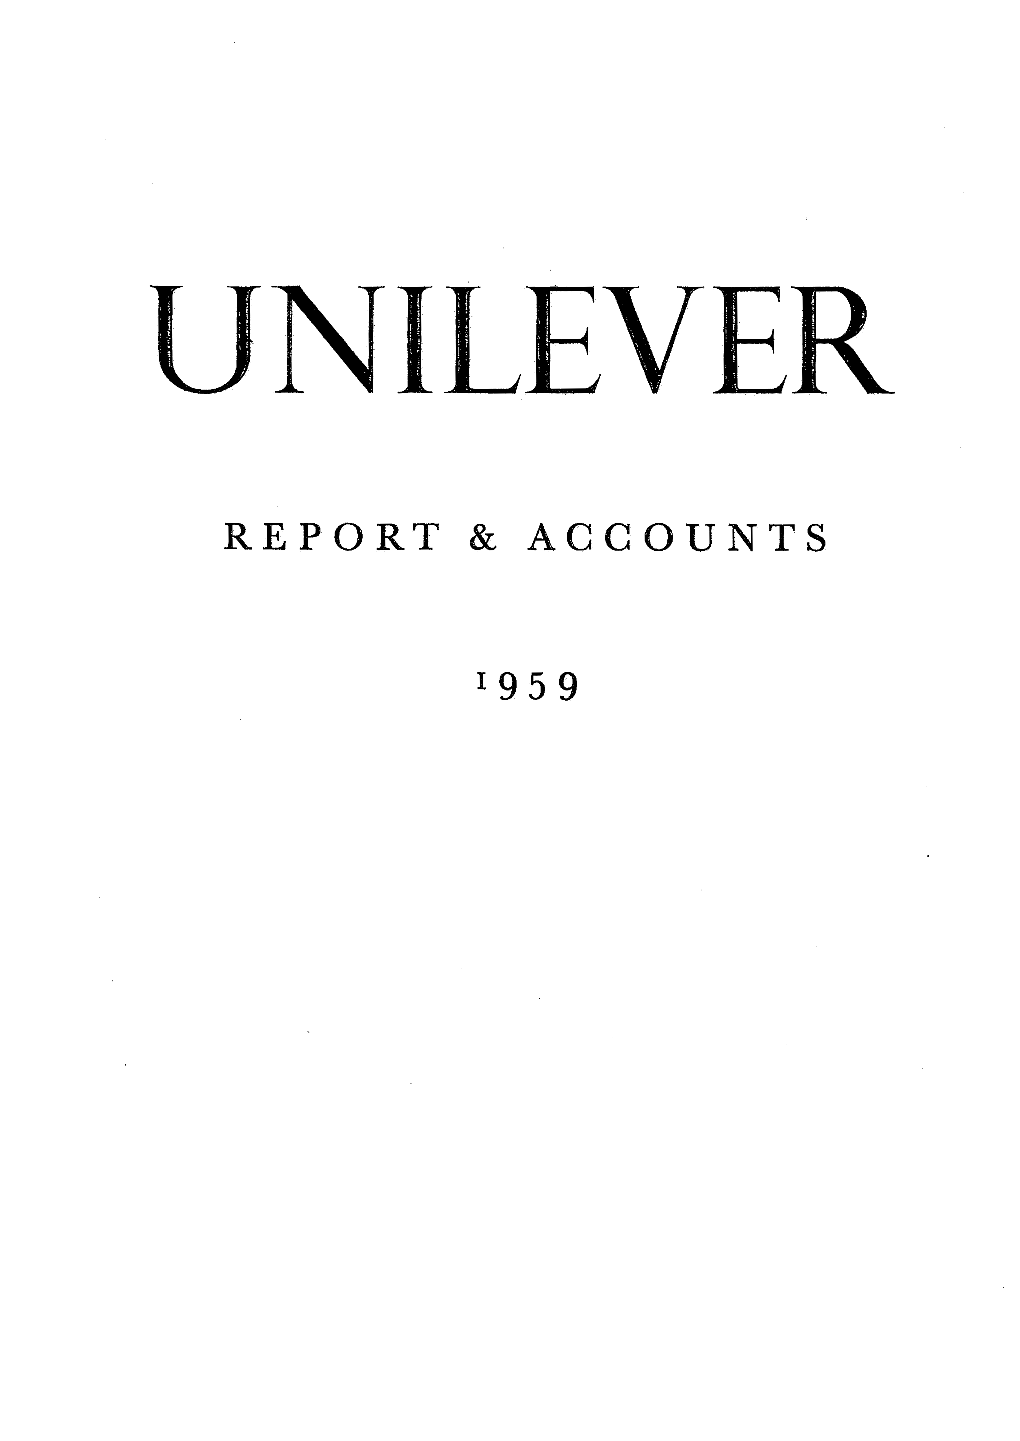 1959 Annual Report